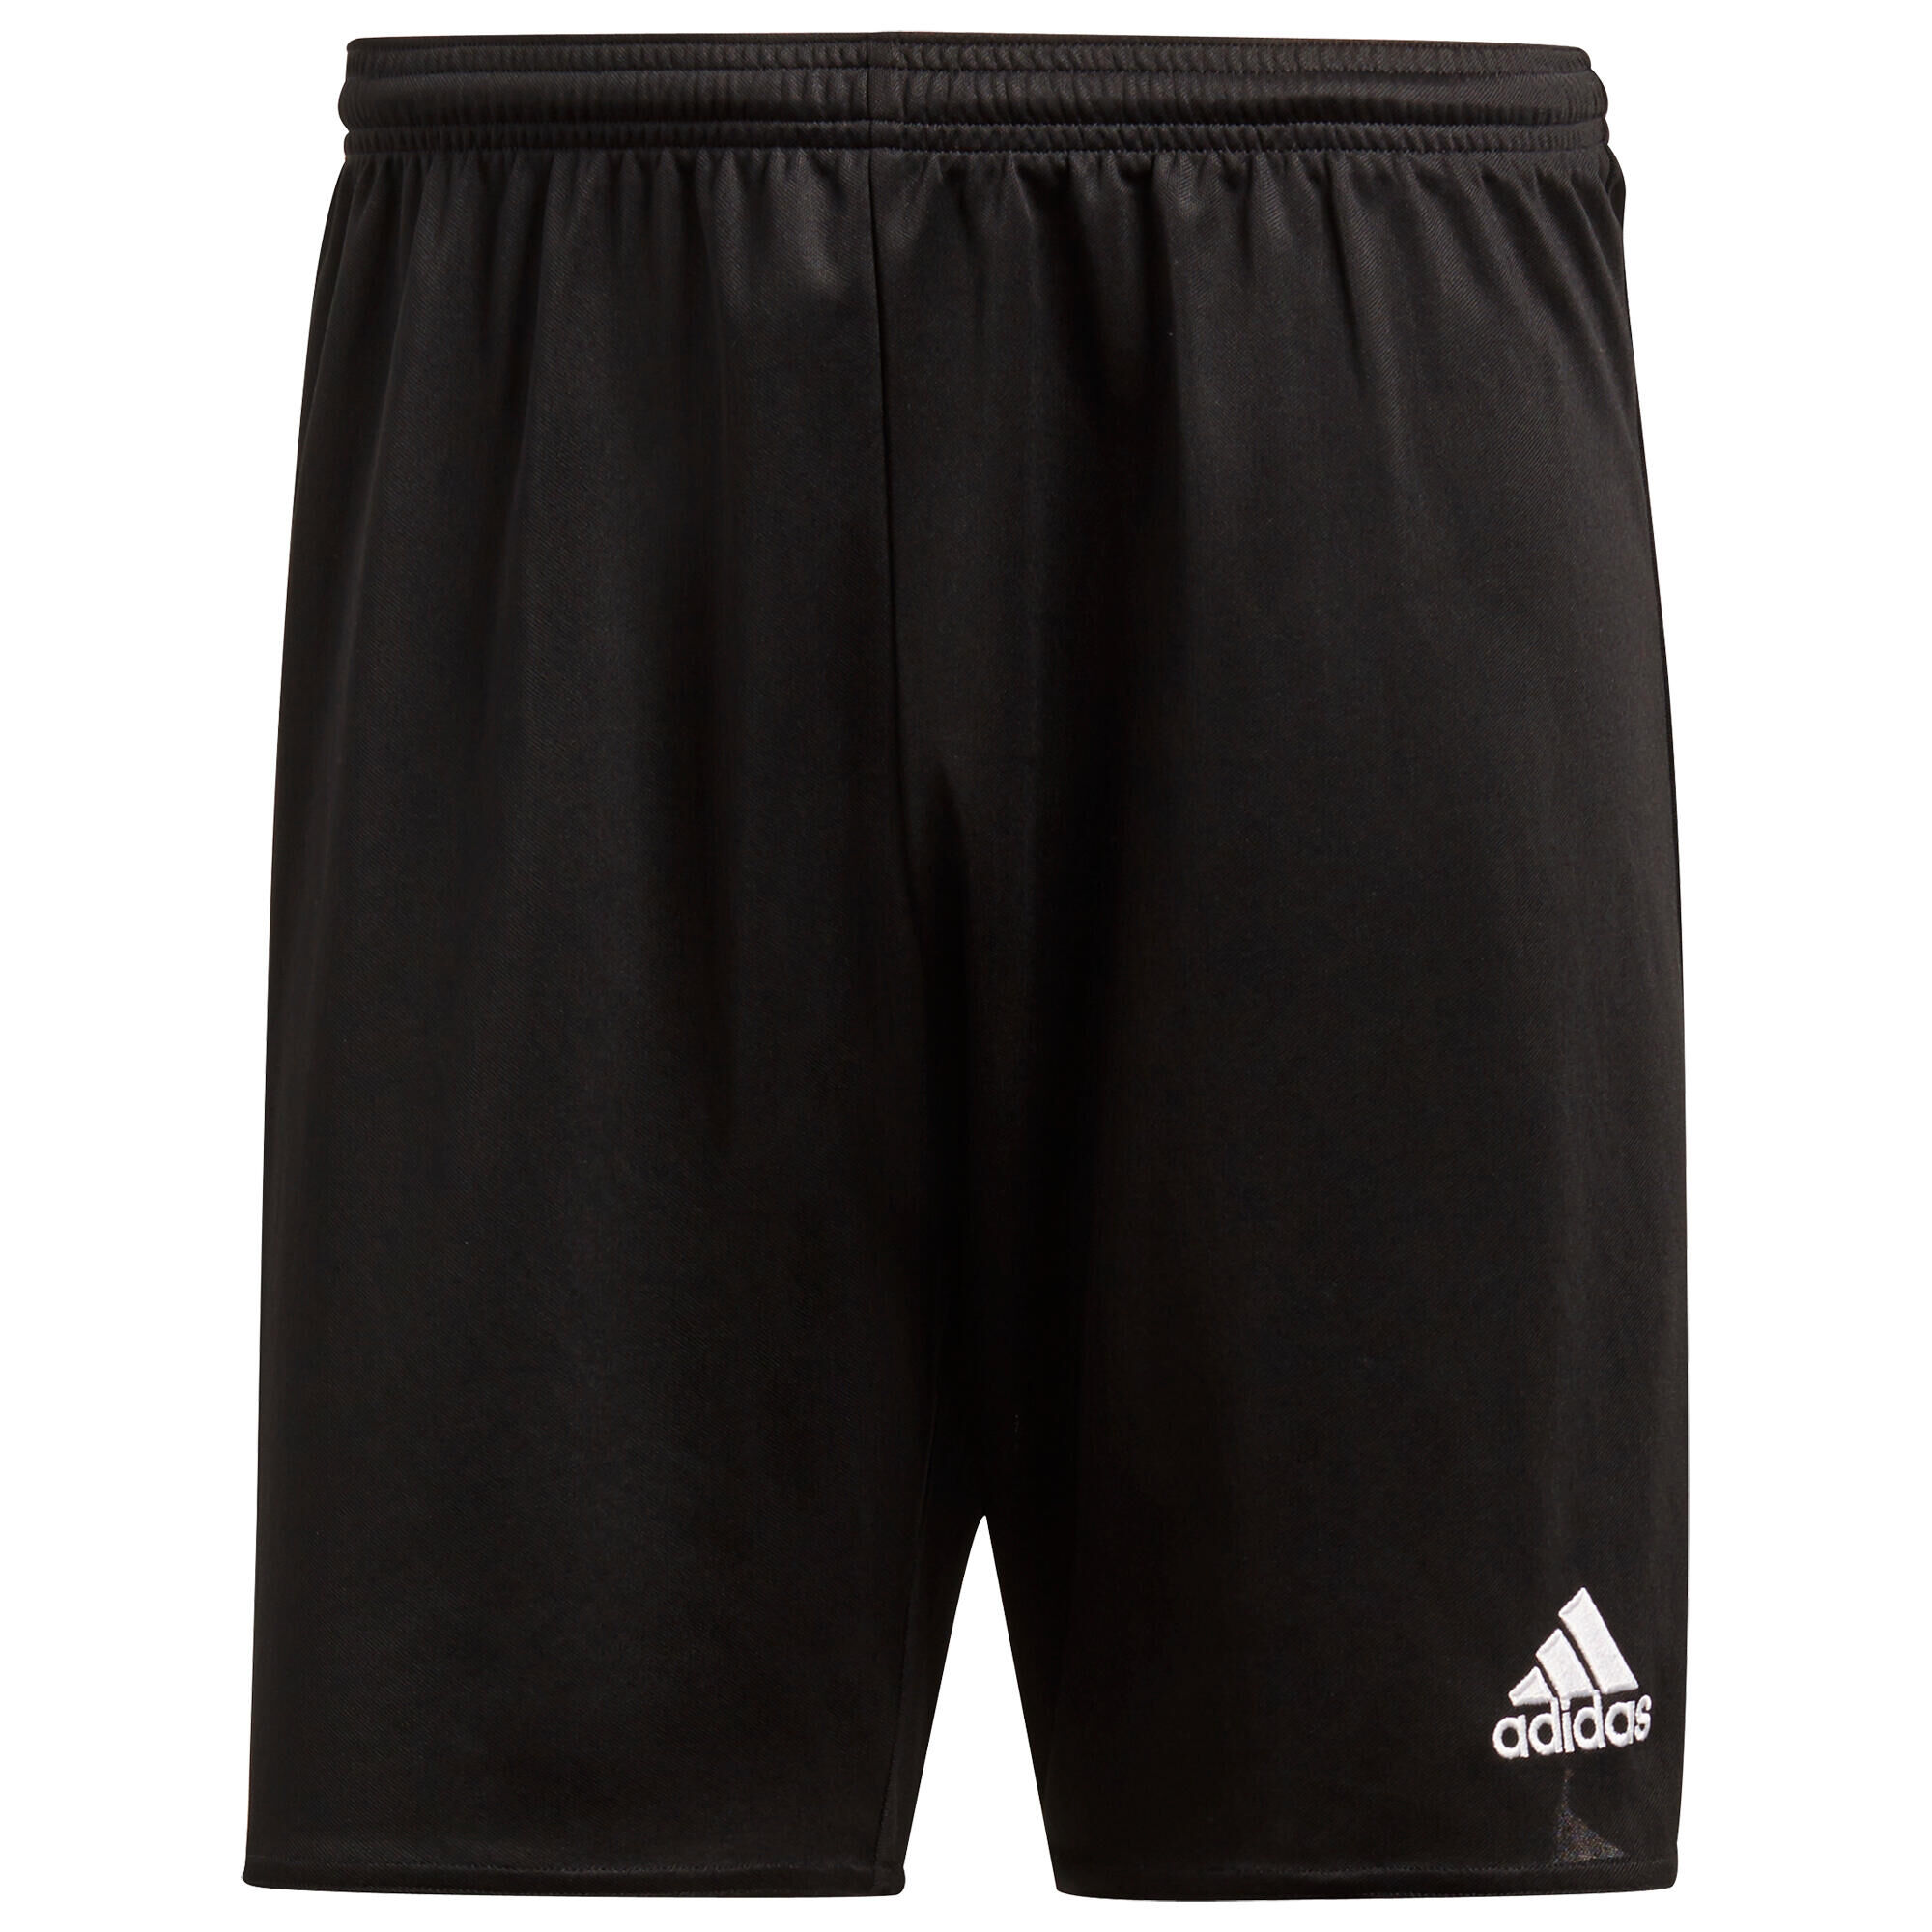 ADIDAS Adult Football Shorts Parma - Black